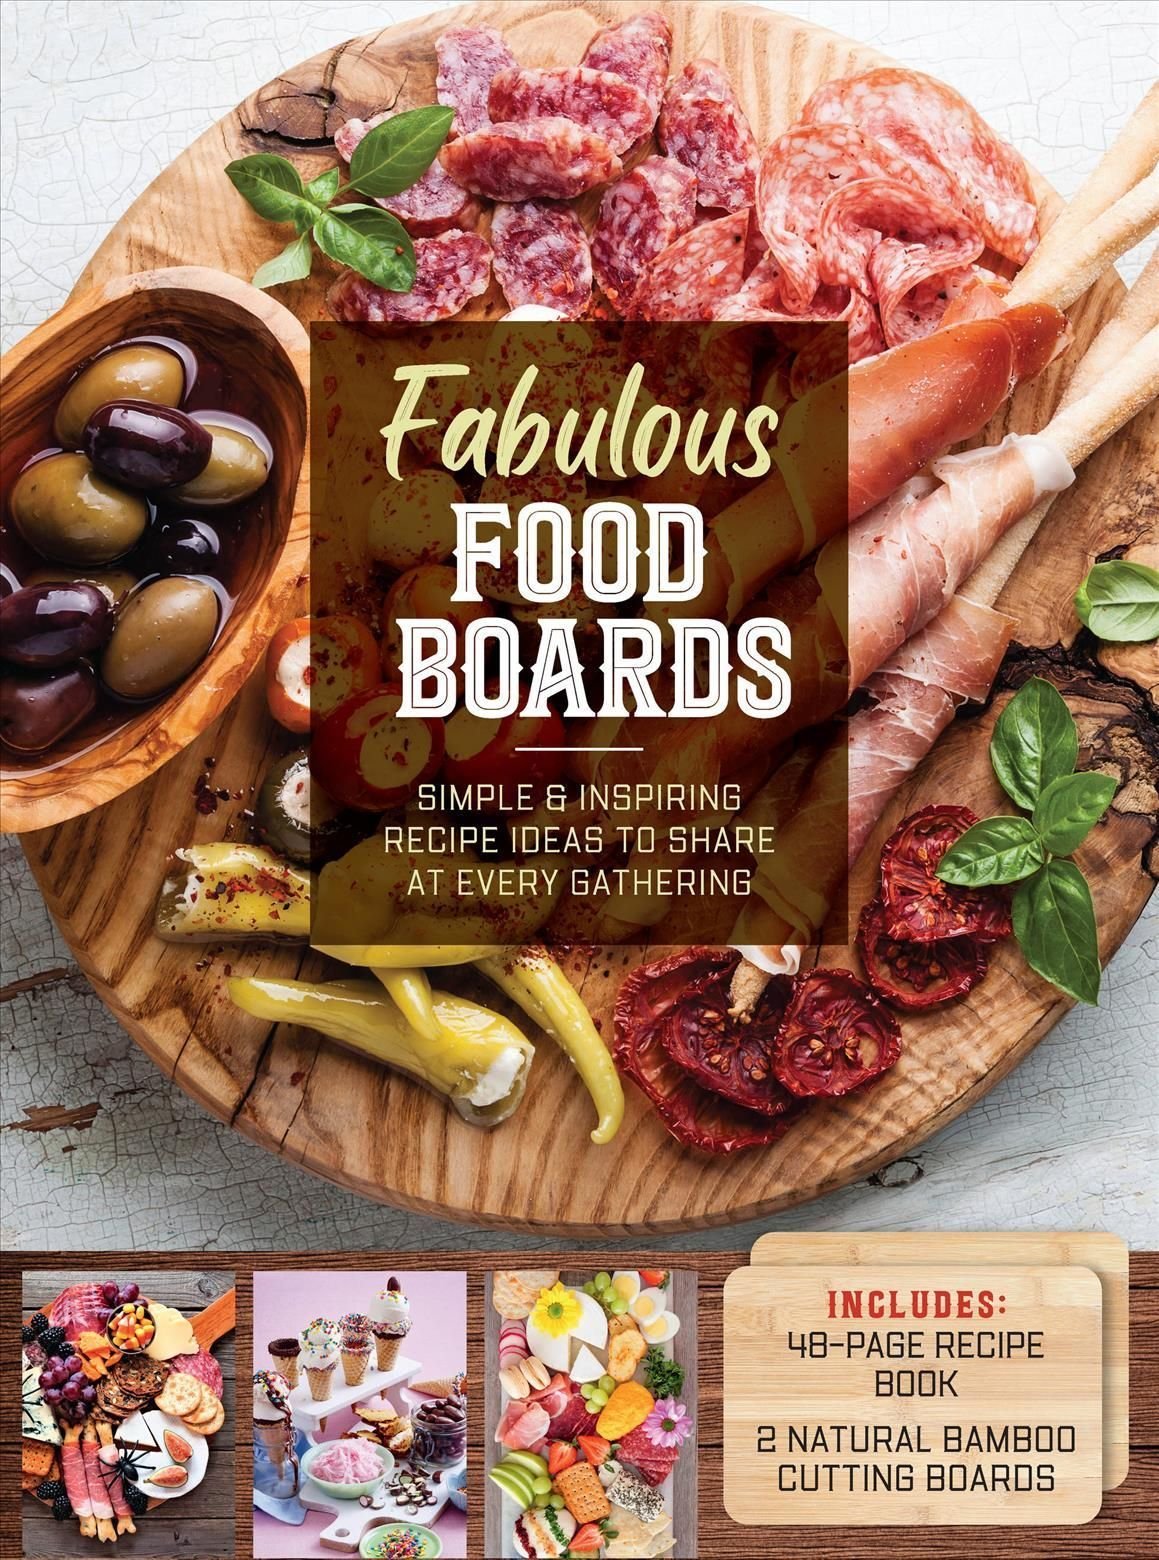 https://wordery.com/jackets/26fc957e/fabulous-food-boards-kit-anna-helm-baxter-9780785842477.jpg